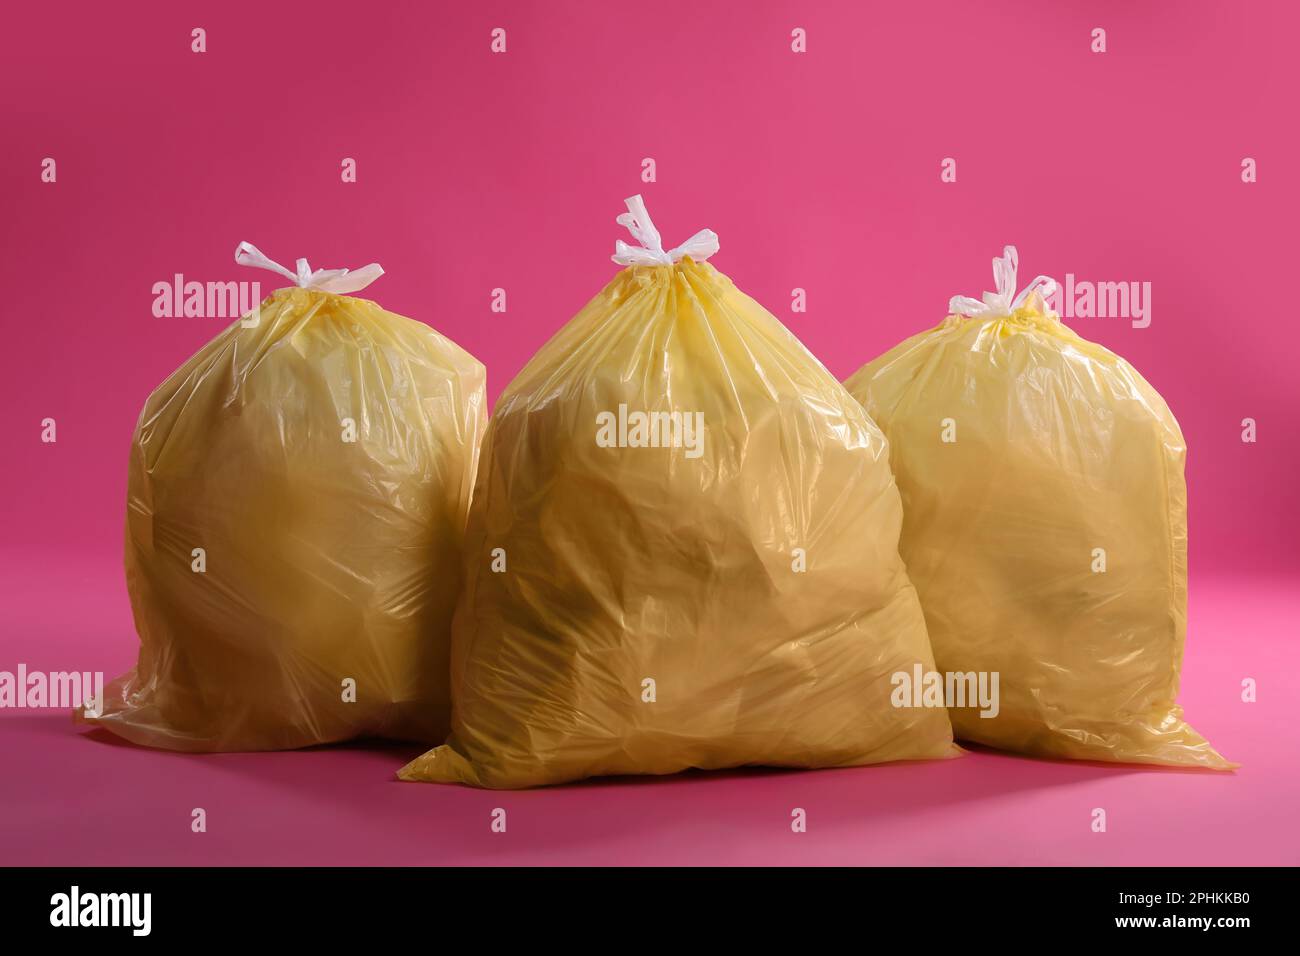 https://c8.alamy.com/comp/2PHKKB0/trash-bags-full-of-garbage-on-pink-background-2PHKKB0.jpg